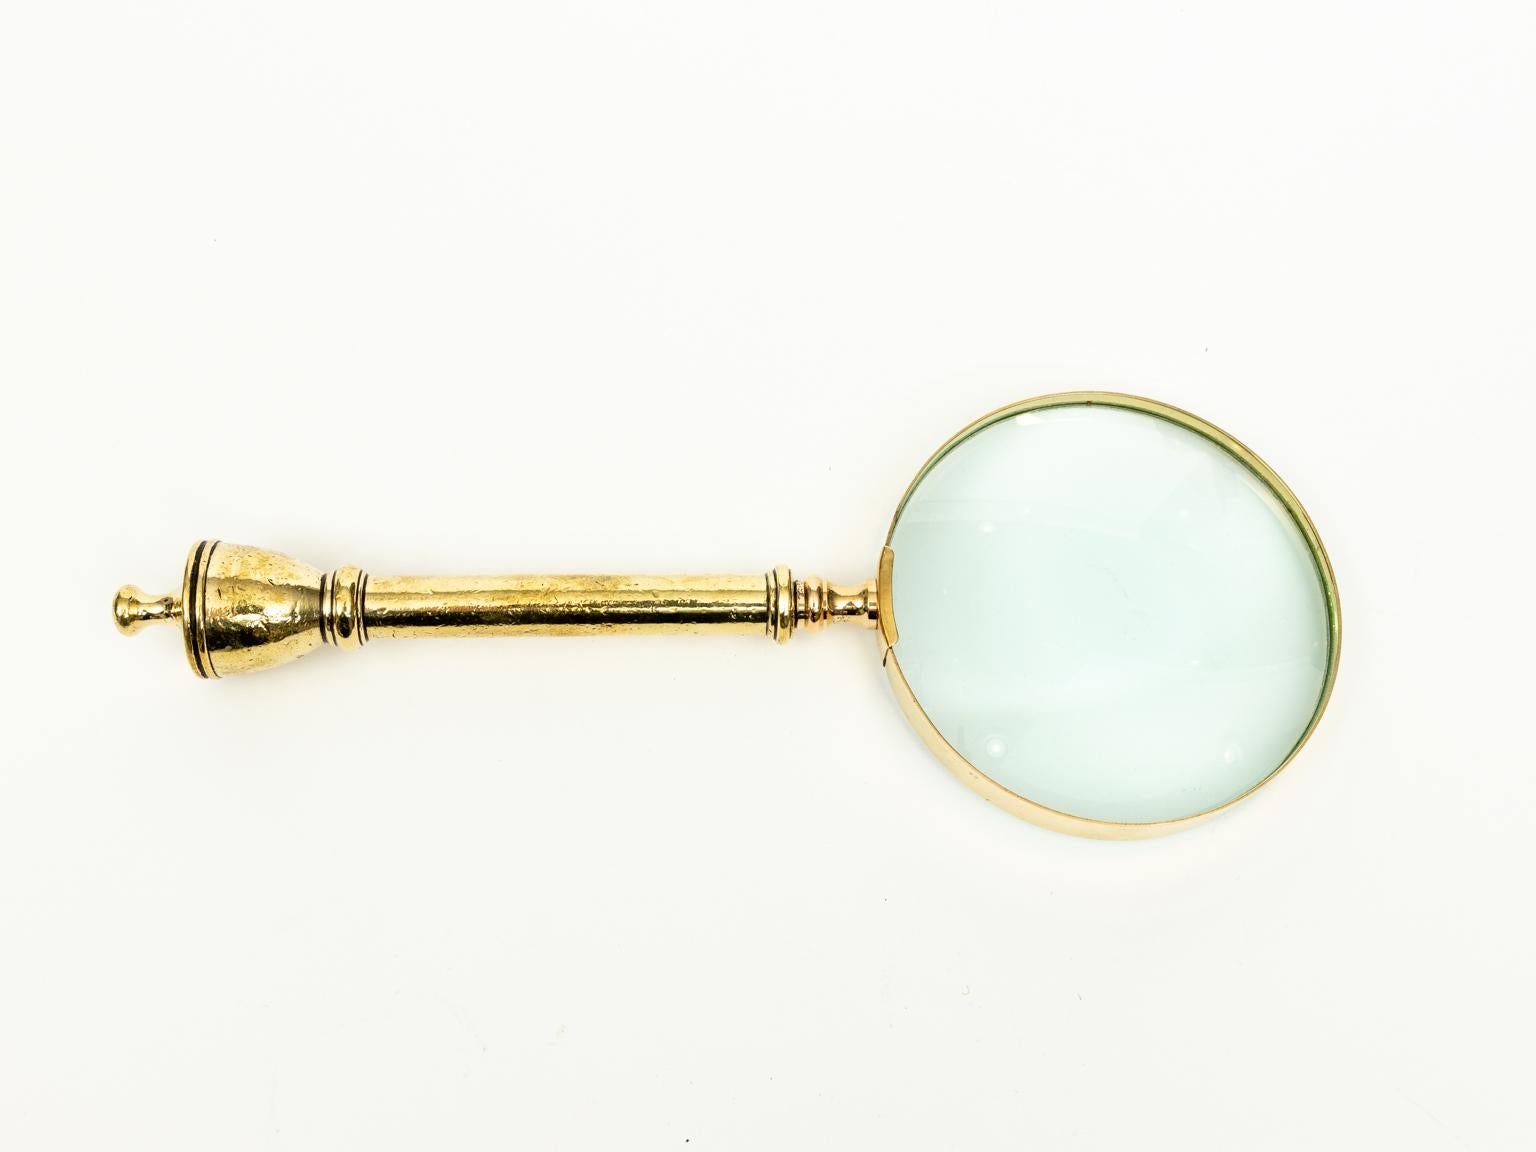 brass magnifying glass